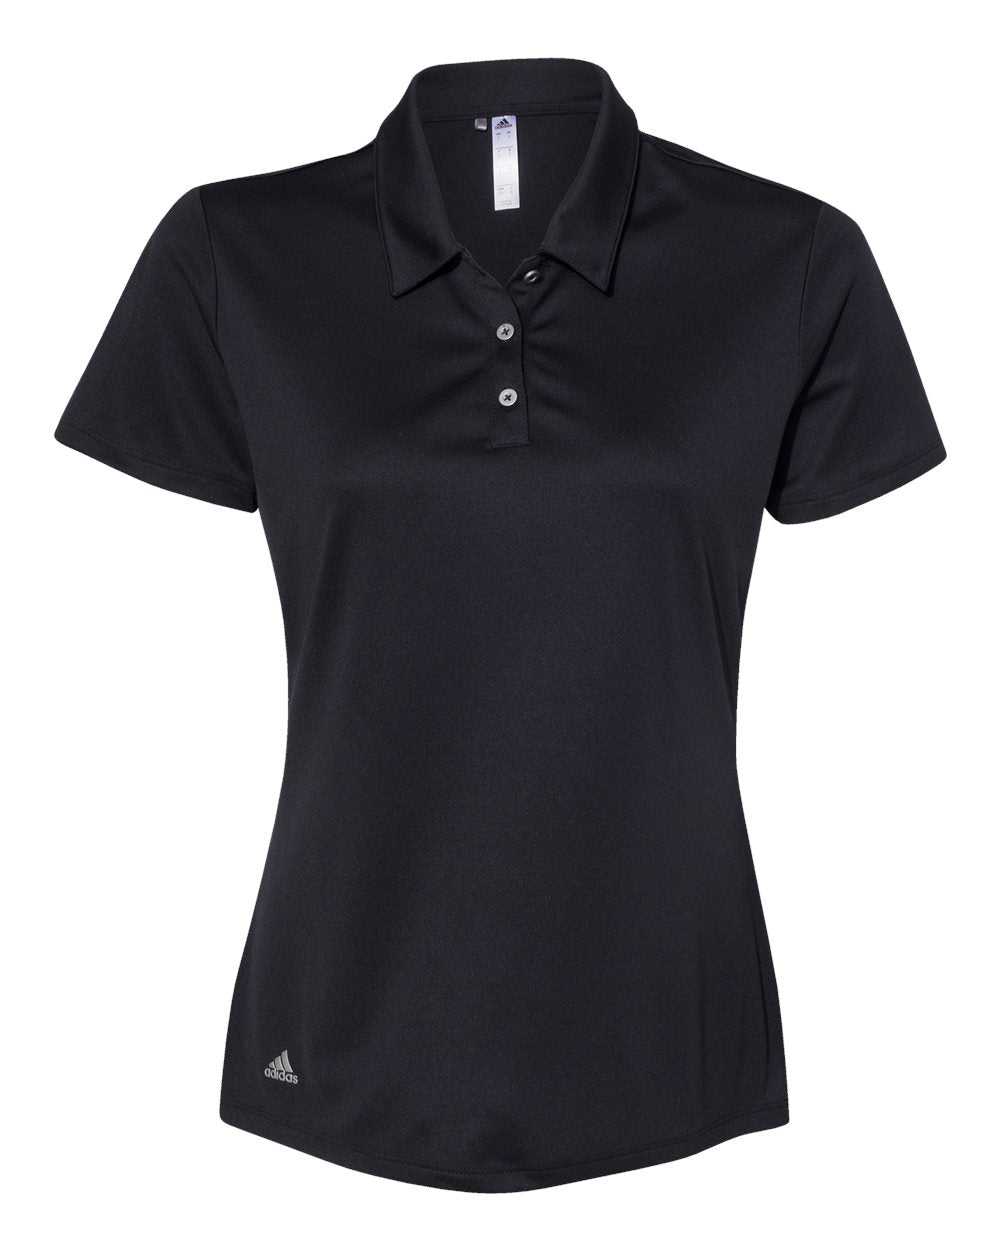 Adidas A231 Women's Performance Sport Shirt - Black - HIT a Double